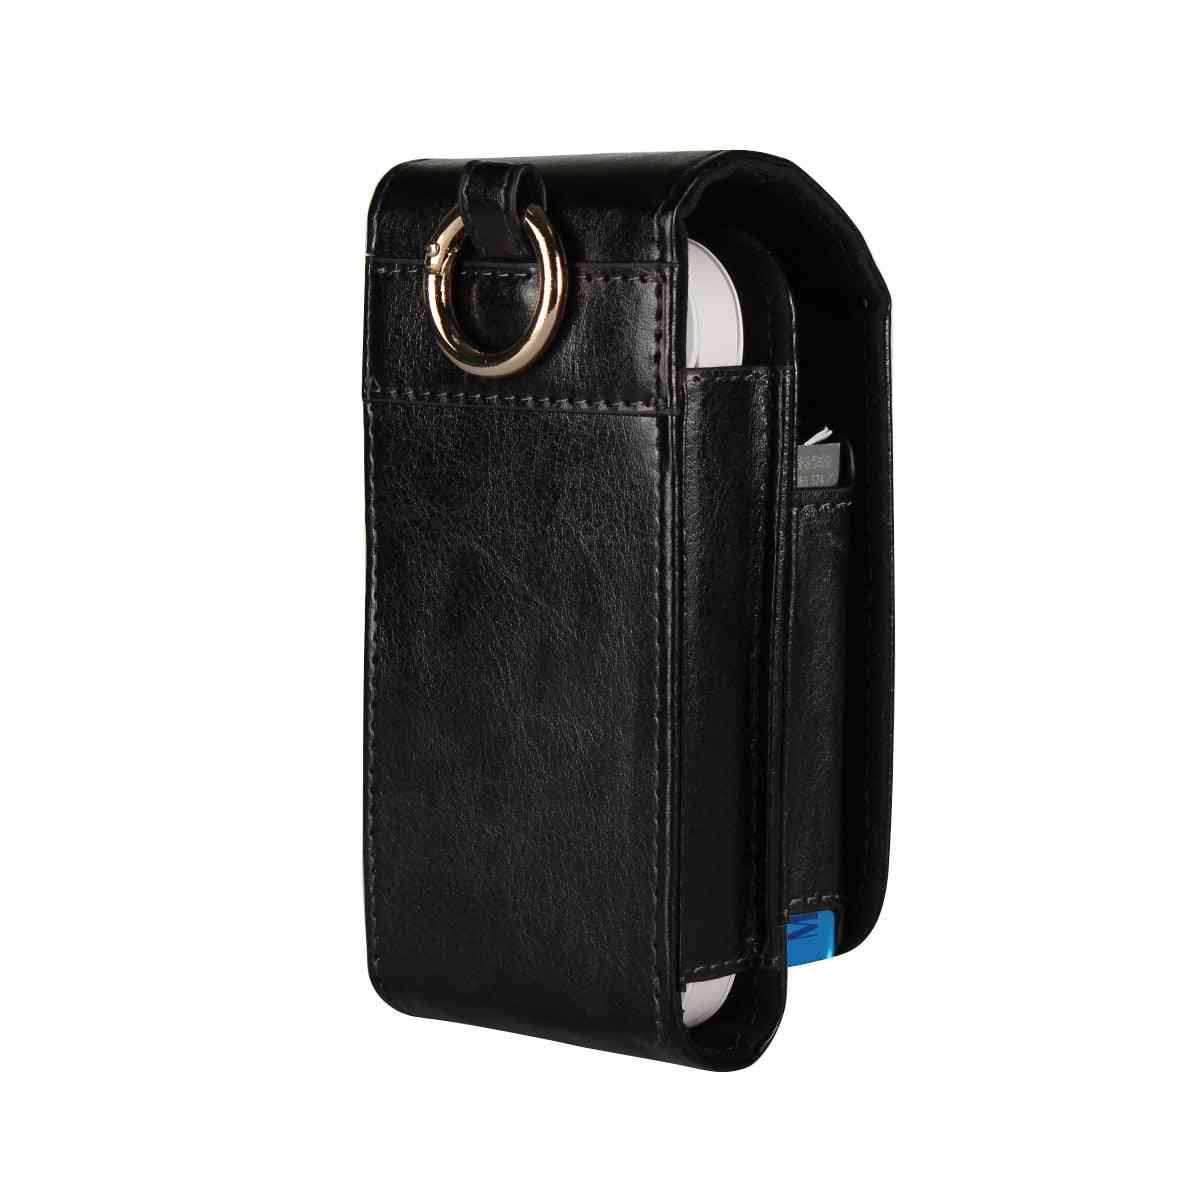 Portable Mini Bag Plus Case Cover, Protective Pouch